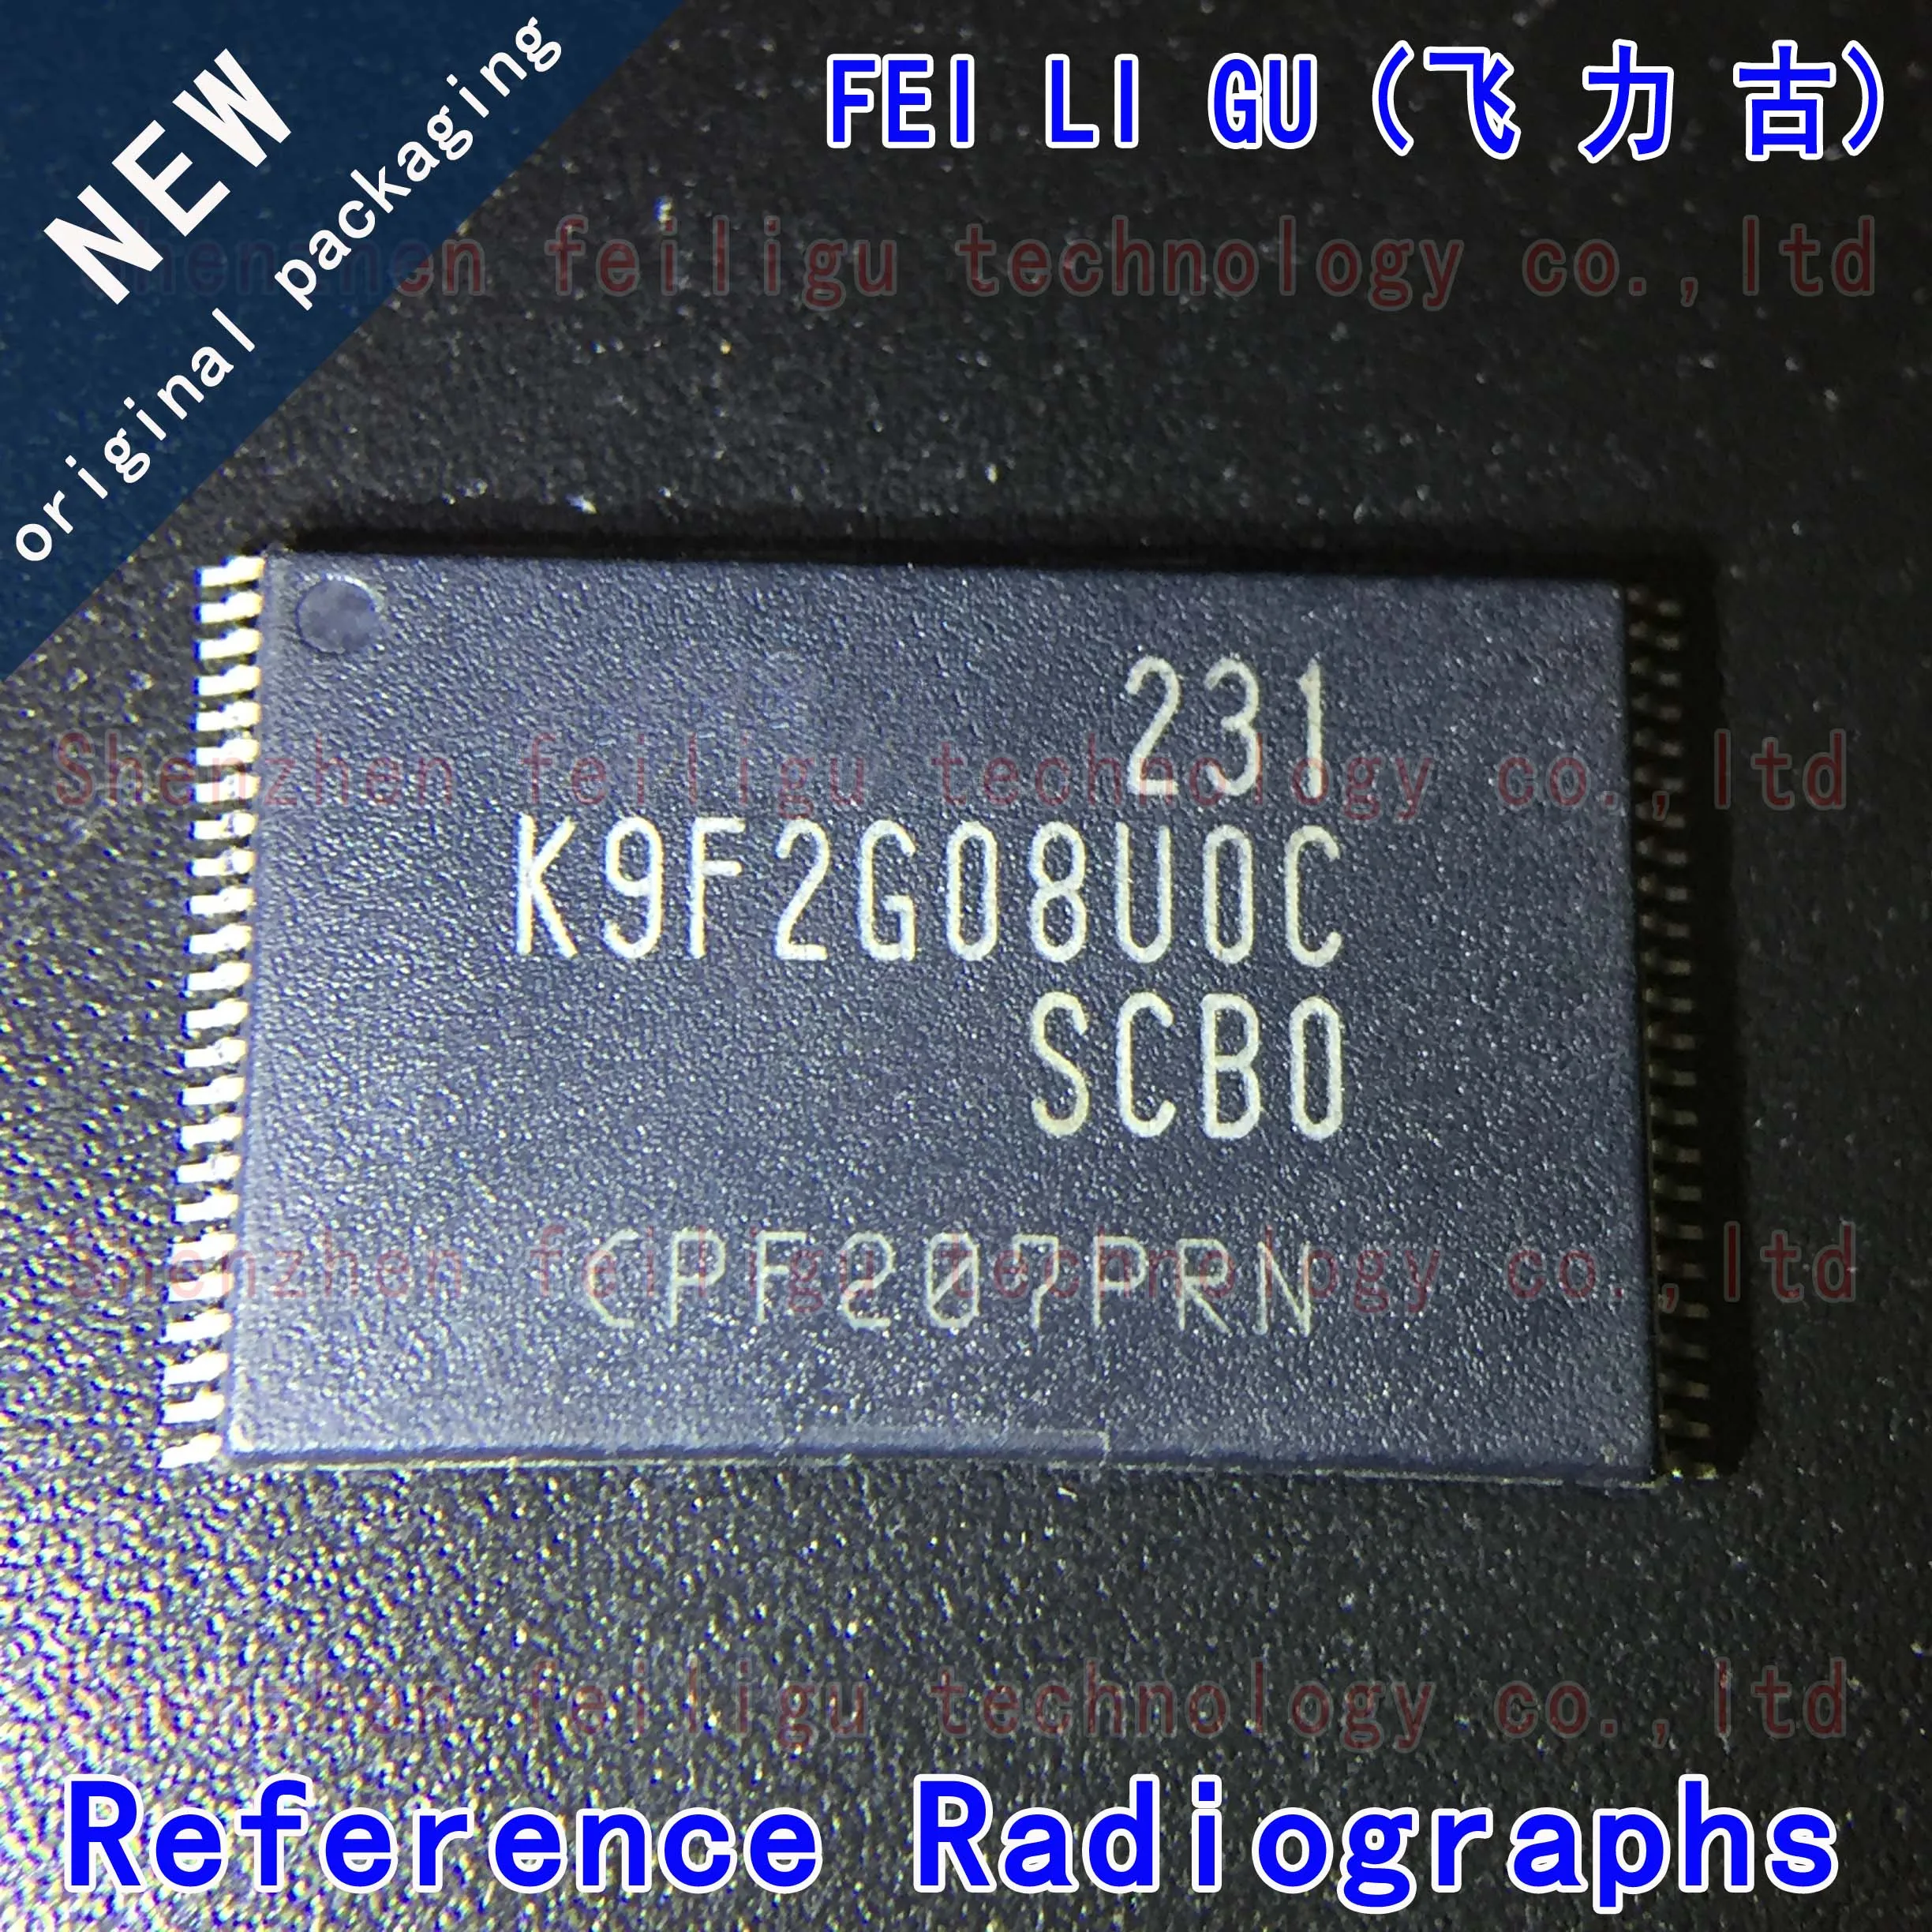 1PCS 100% New original K9F2G08U0C-SCB0 K9F2G08U0C package:TSOP48 memory flash chip 1pcs 100% new original mt29f8g08abacawp c 29f8g08abaca package tsop48 flash nand 8gb memory chip